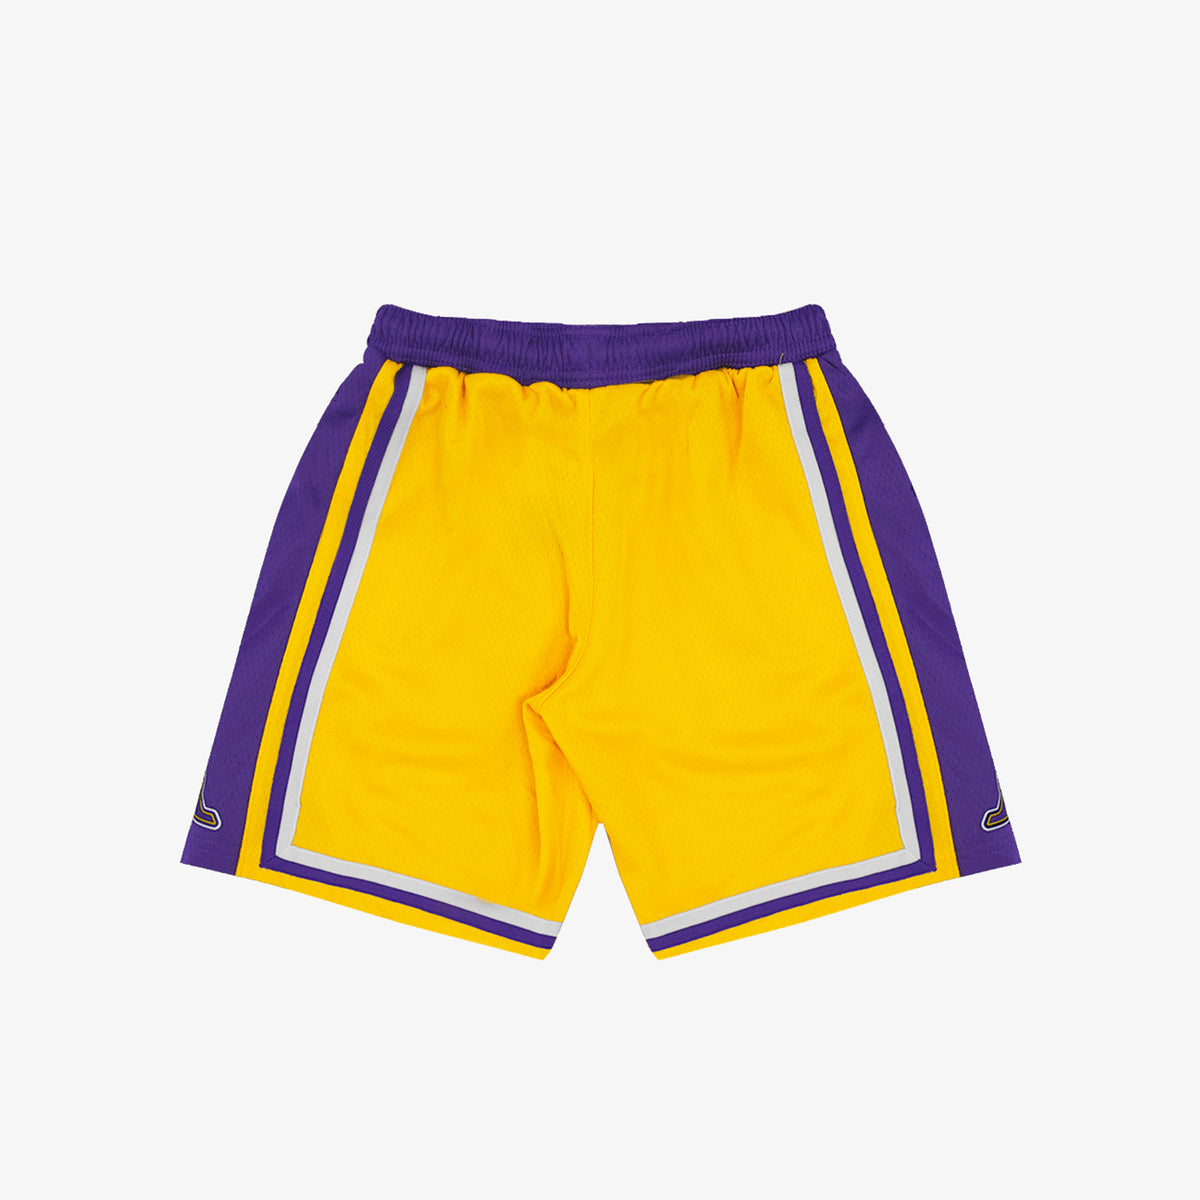 NBA Men's Shorts - Yellow - XL